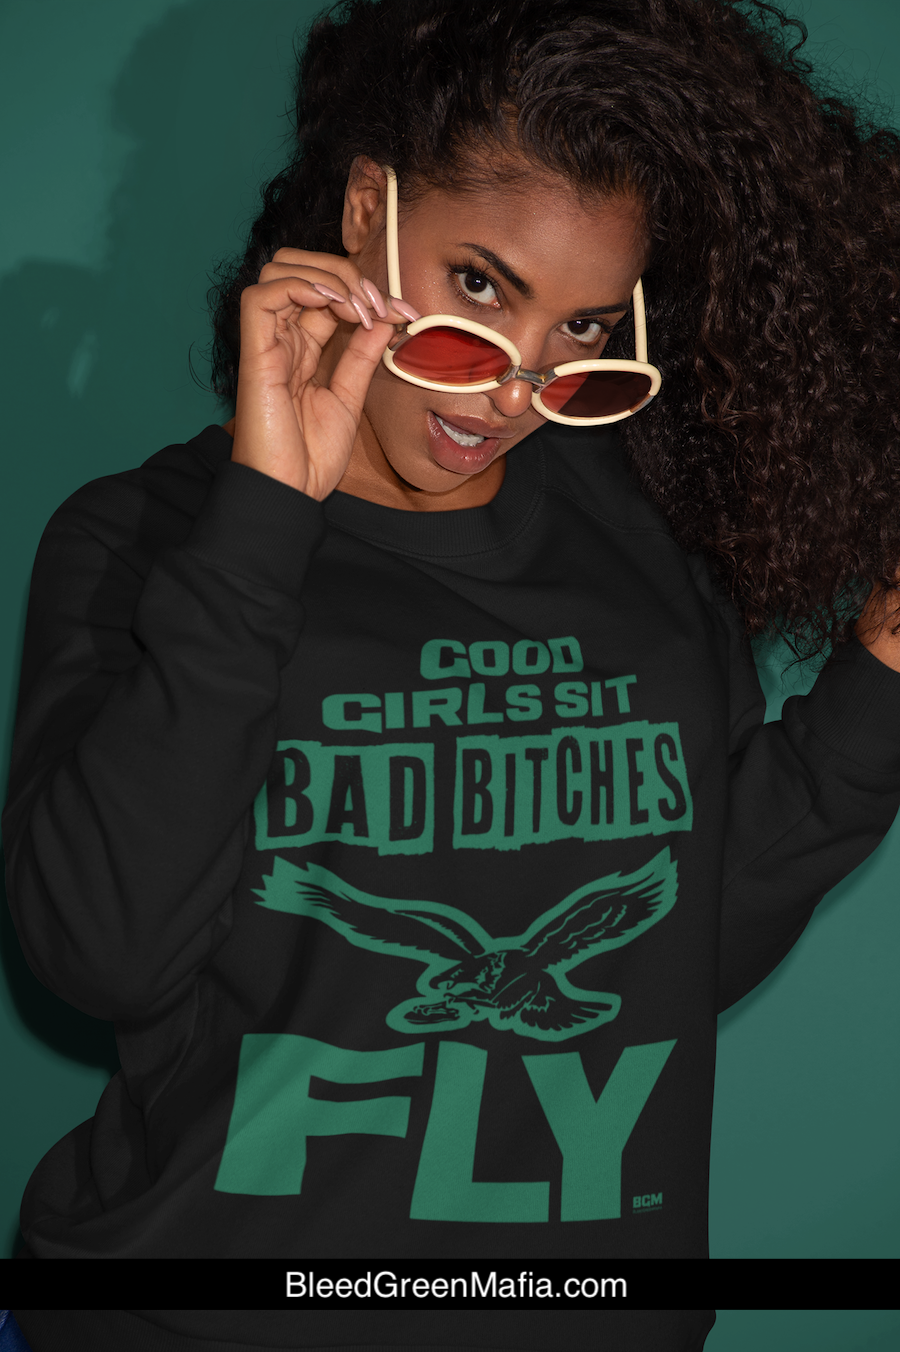 Good Girls Sit Bad B*tches Fly Crewneck Pullover Sweatshirt